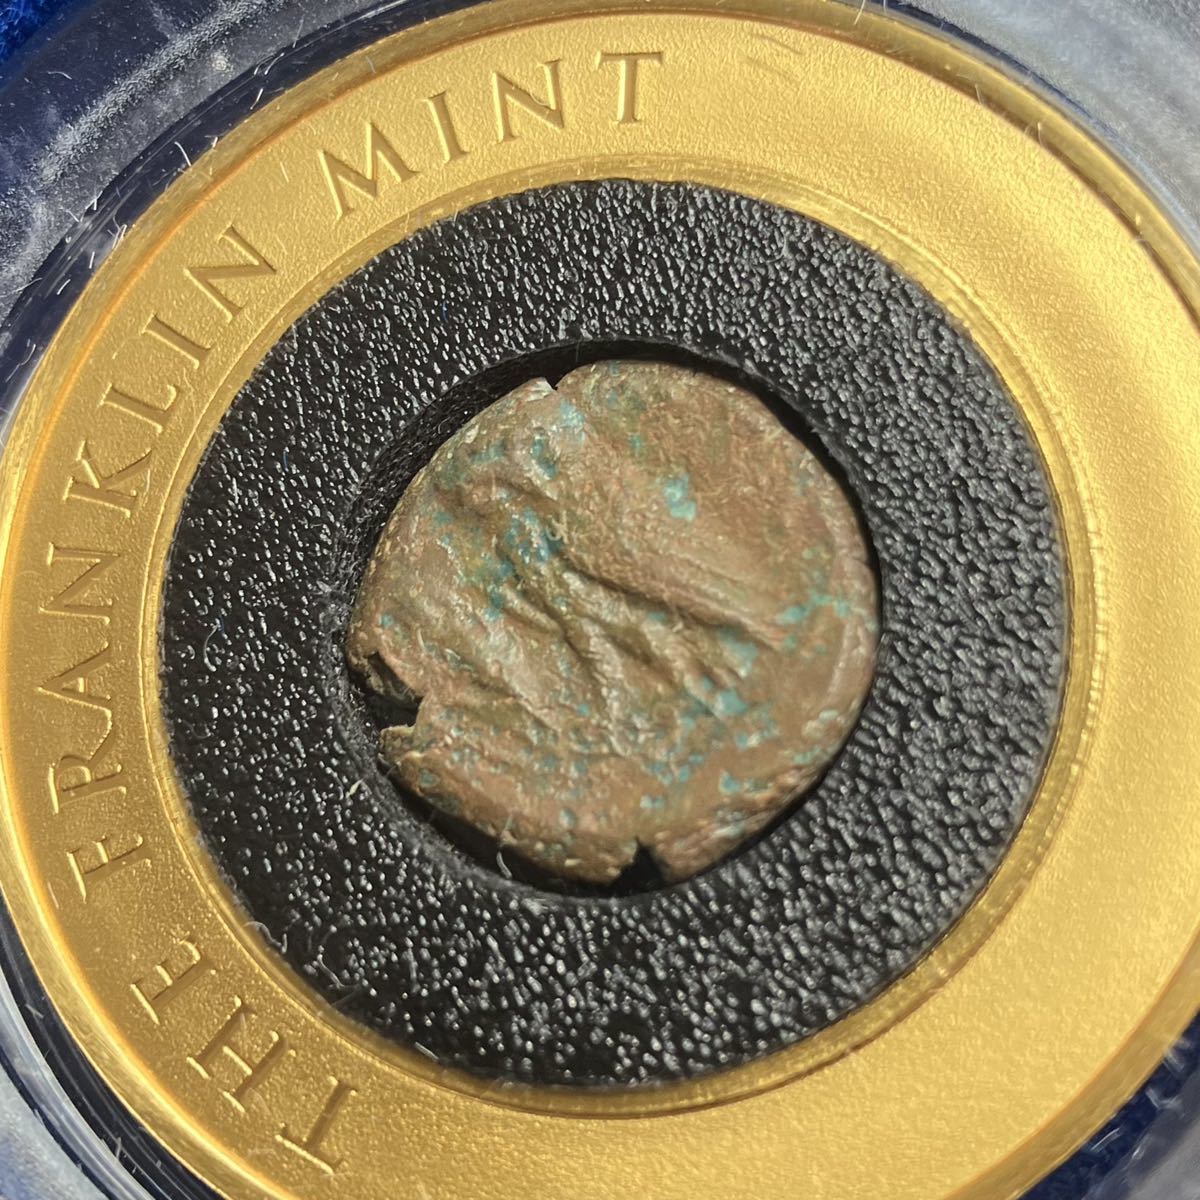  old fee copper coin Magna glae Kia. . crack . coin silver coin old coin The Lost Coin of Magna Graecia Franklin Mint 